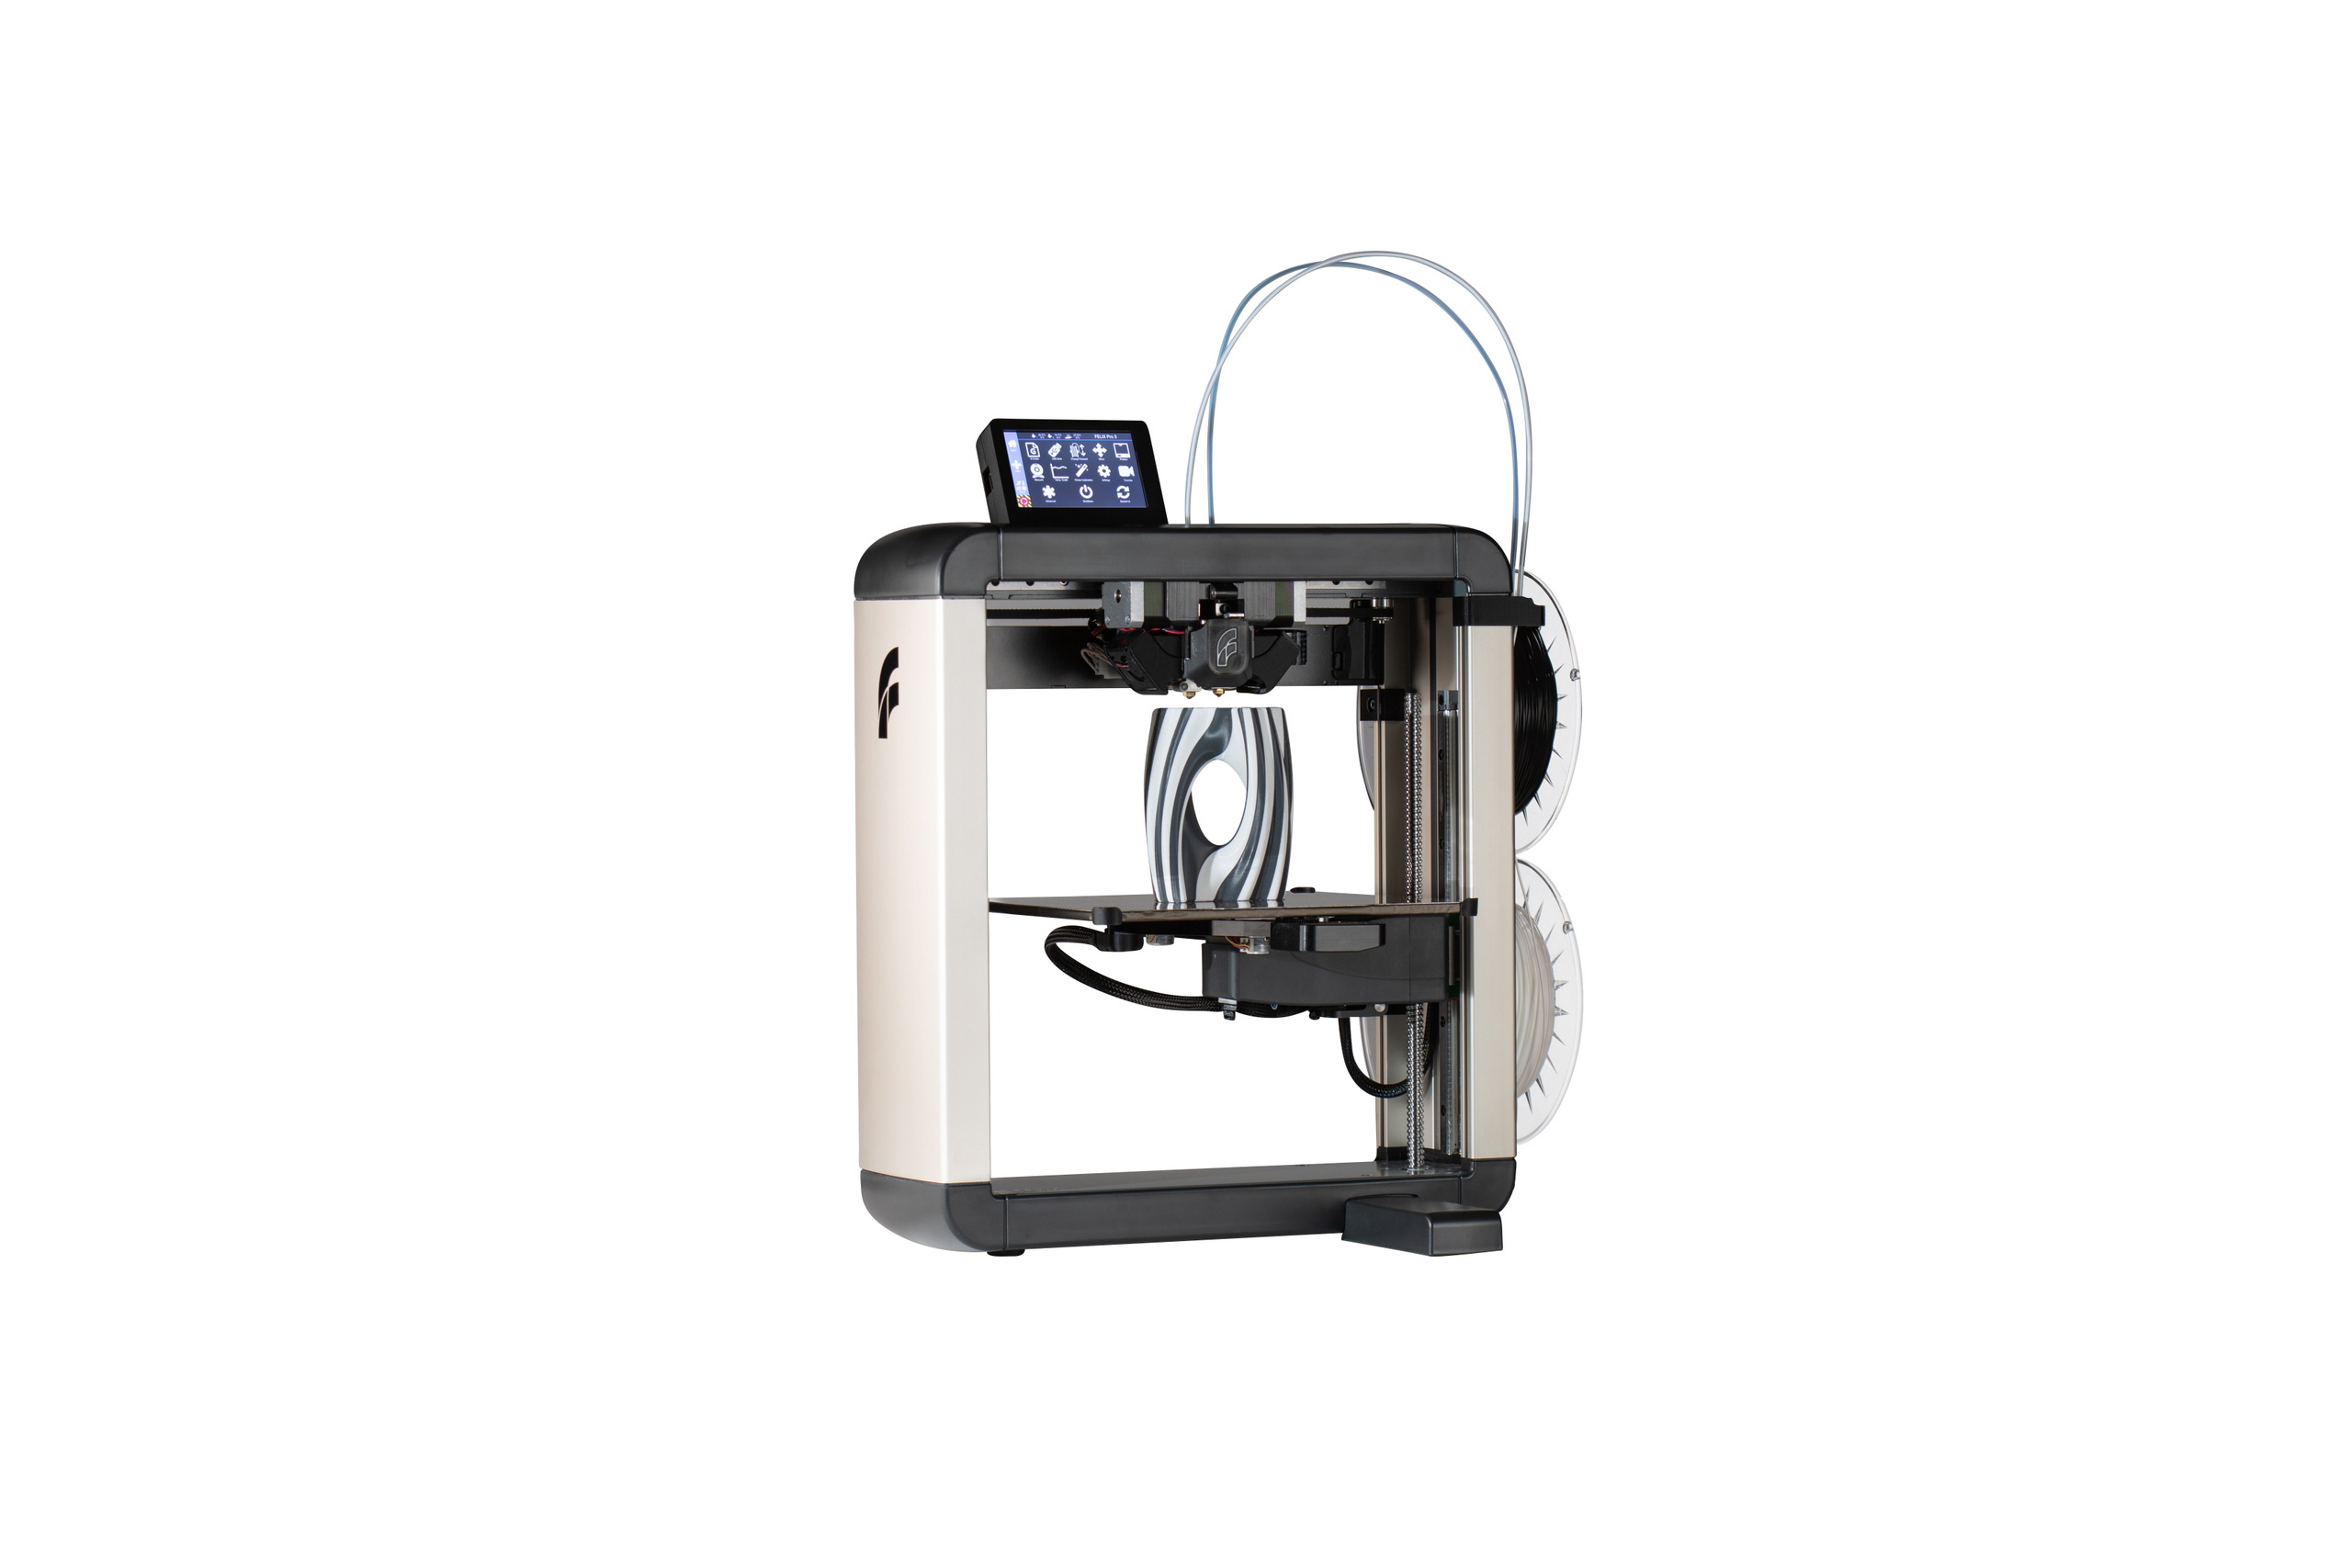 The FELIX Pro 3 3D printer. Photo via FELIXprinters.